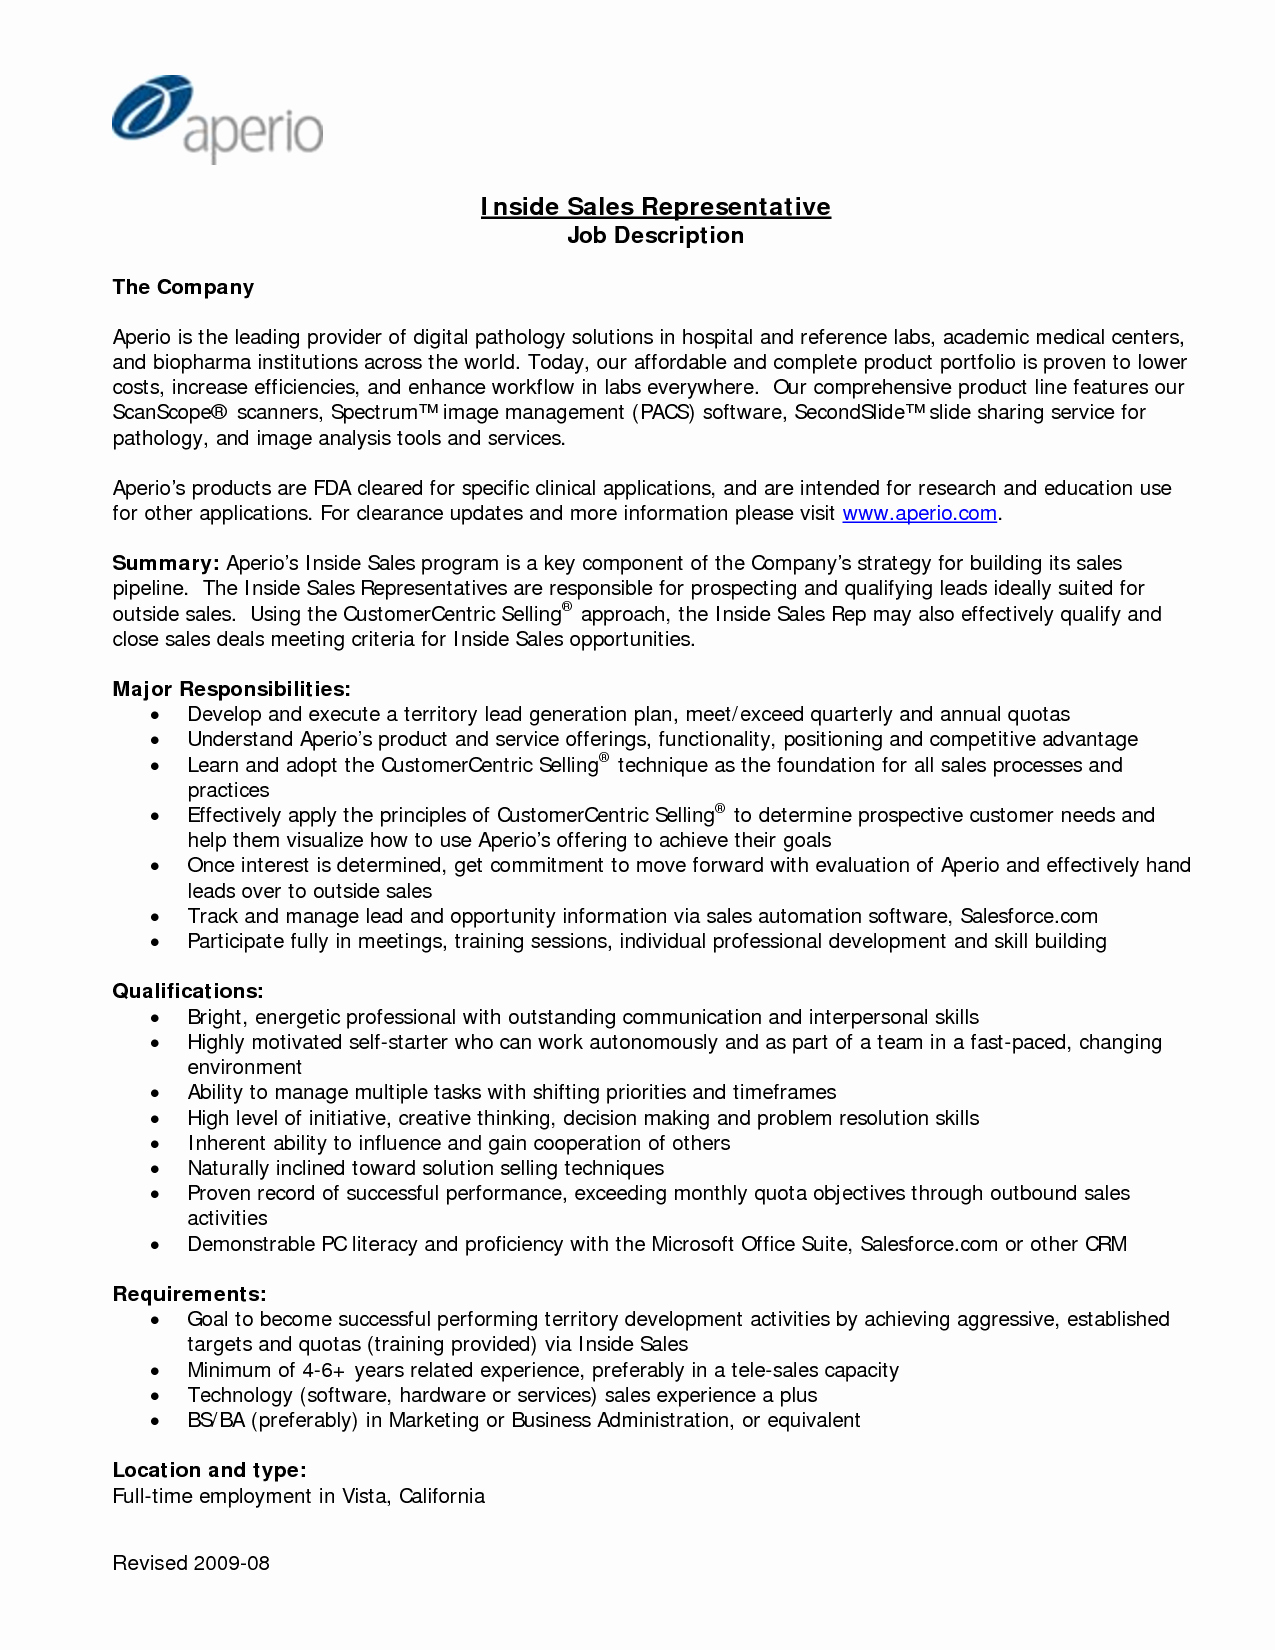 Resume for Sales Representative Position Fresh Resume Sales Representative Job Description Sample